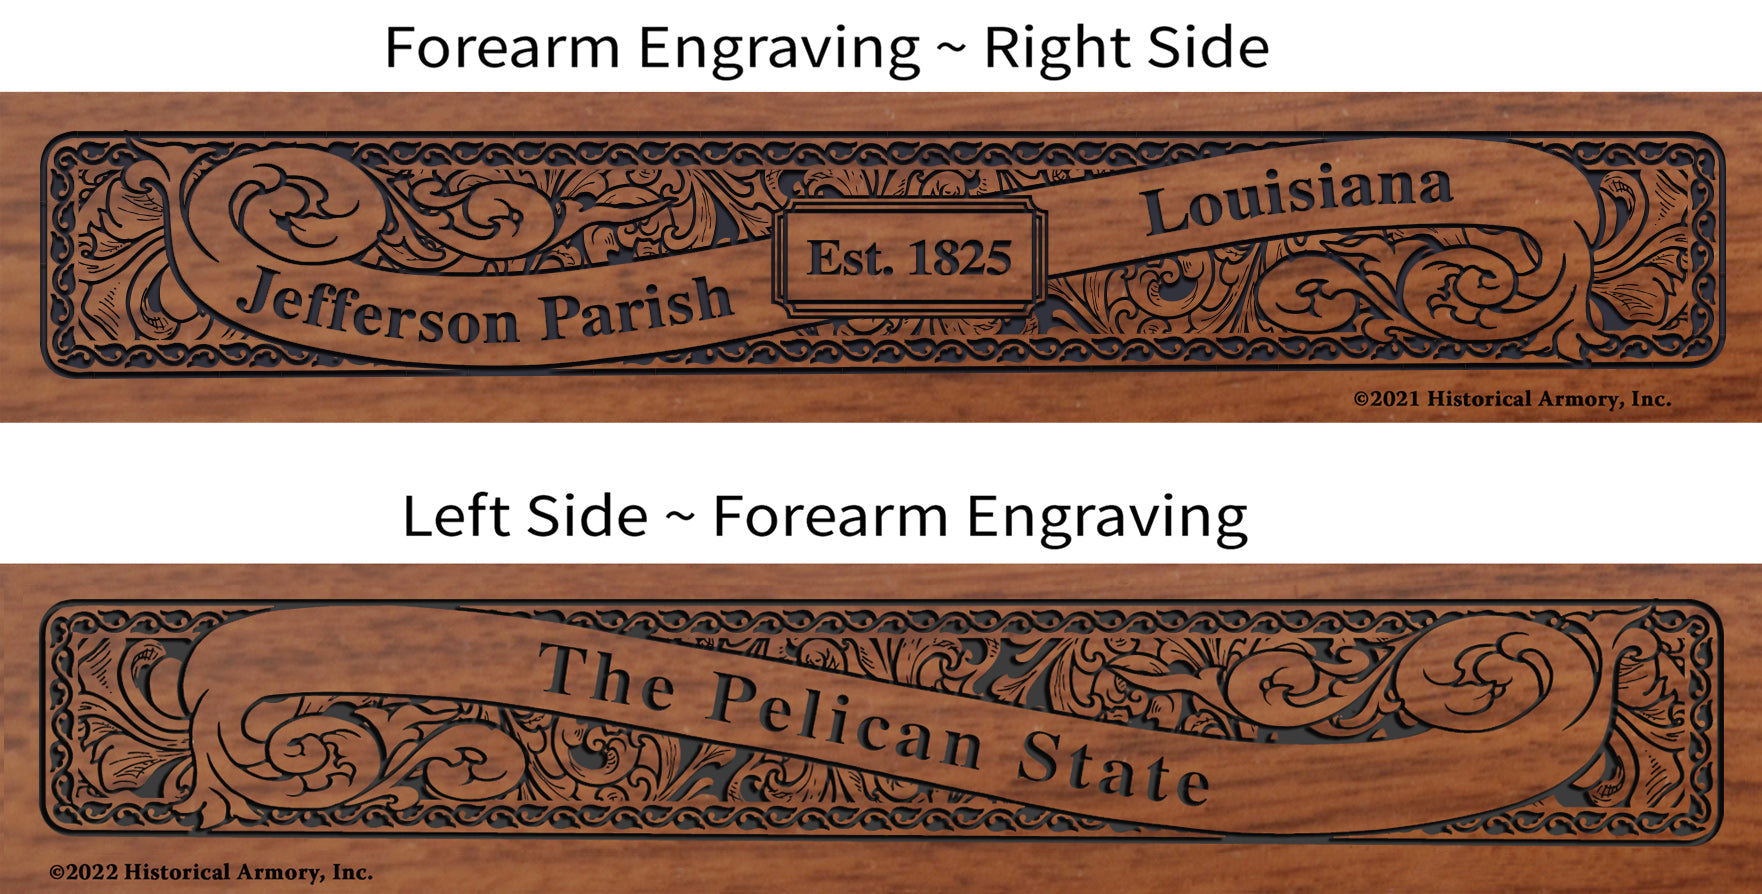 Jefferson Parish Louisiana Engraved Rifle Forearm